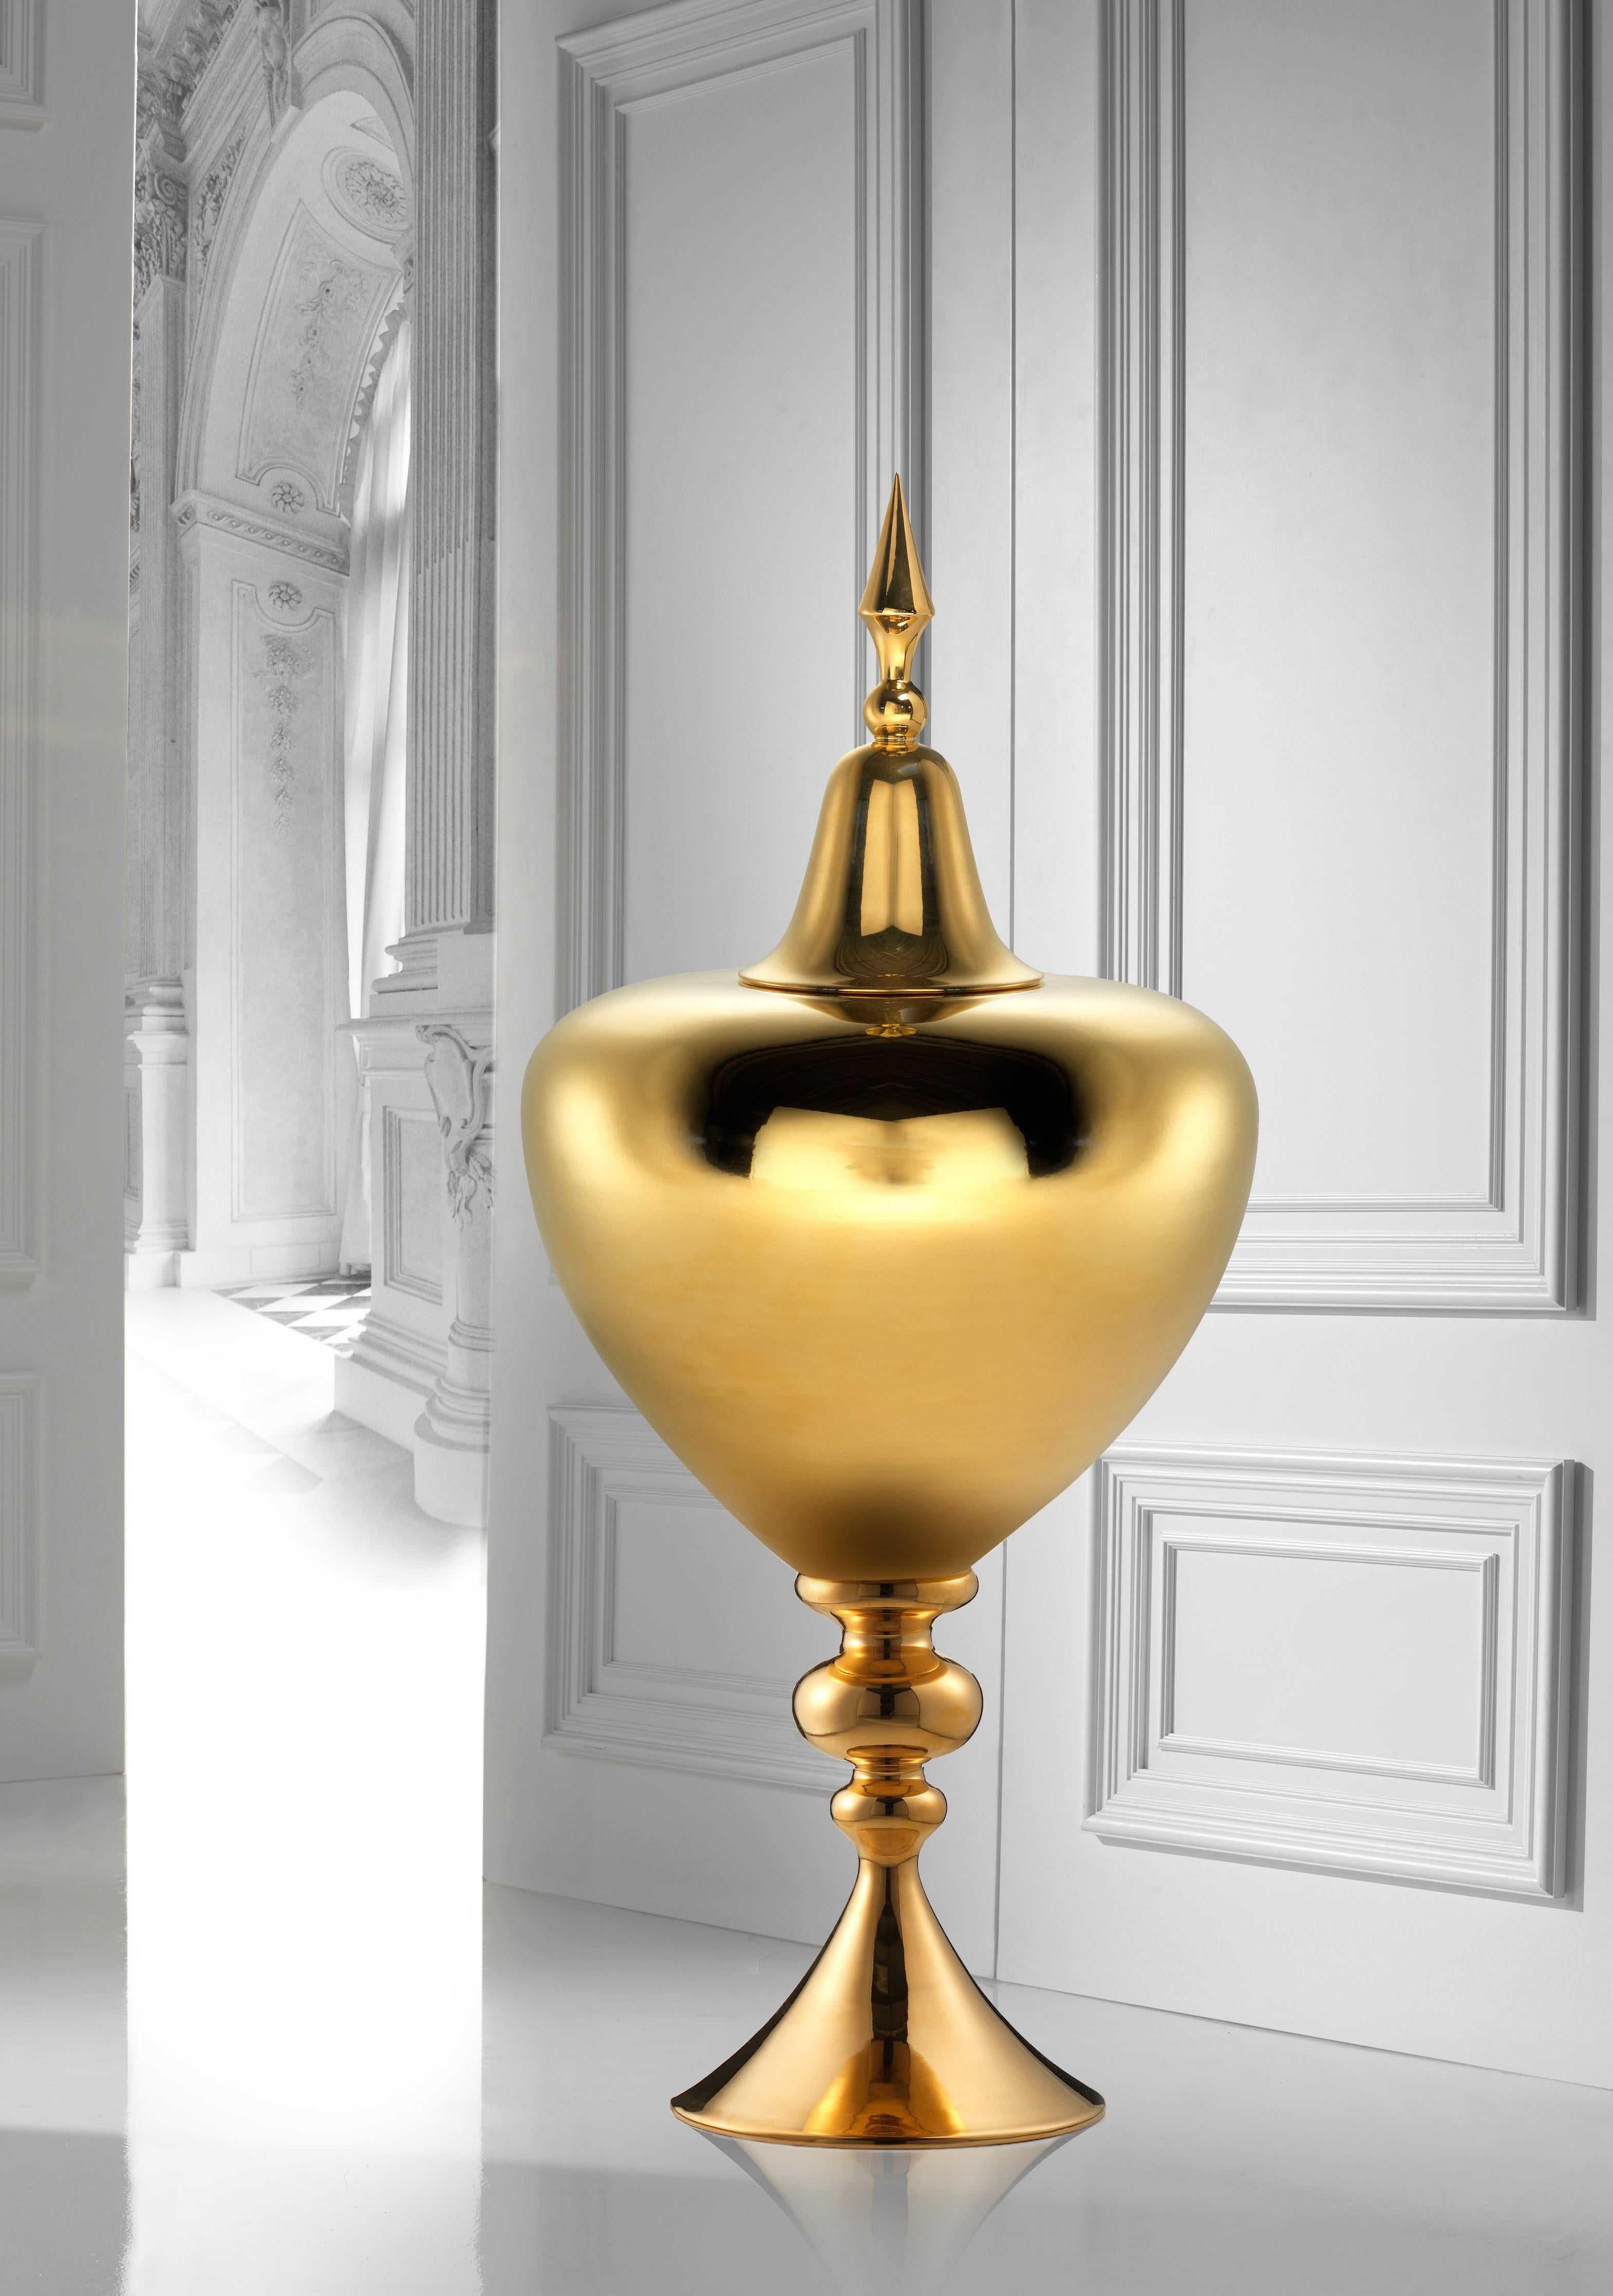 HARSHA - Ceramic vase fully handcrafted in 24-karat gold.

code VS090
measures: H. 148.0 cm., Dm. 58.0 cm.